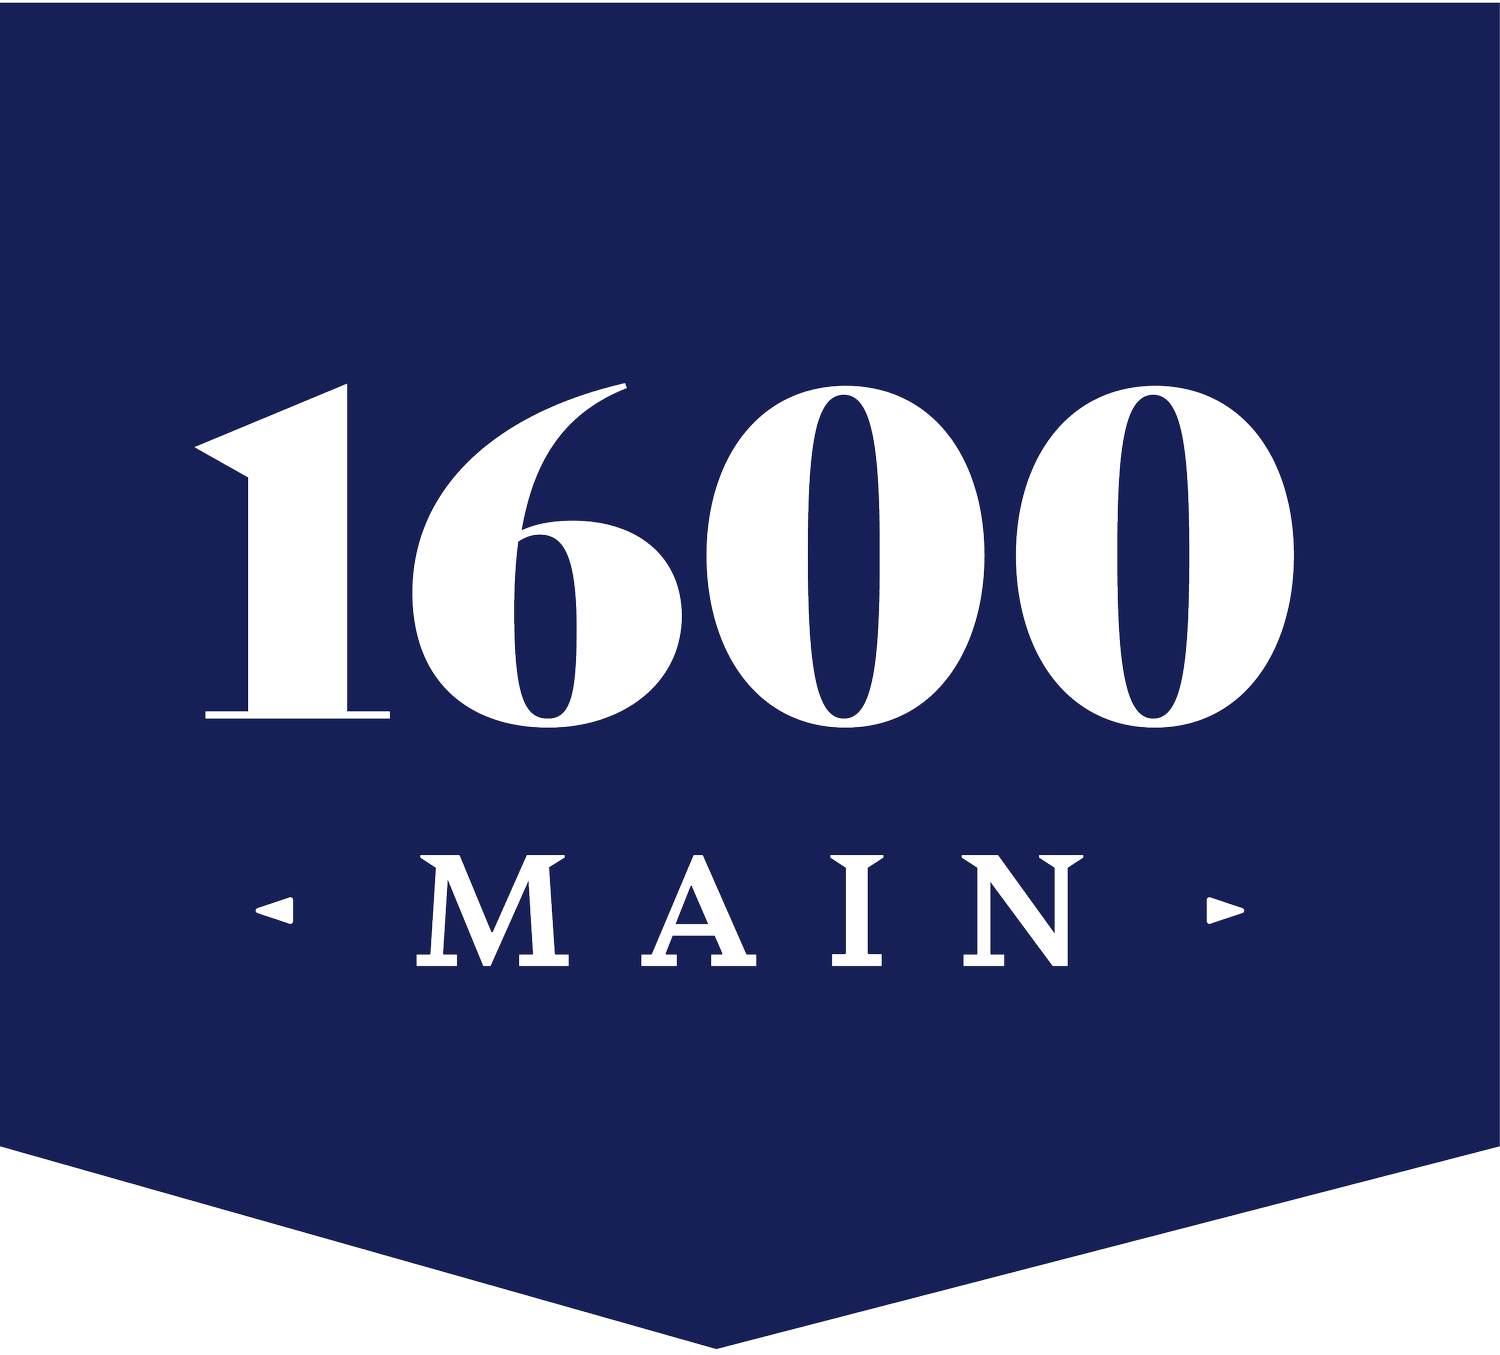 1600 Main